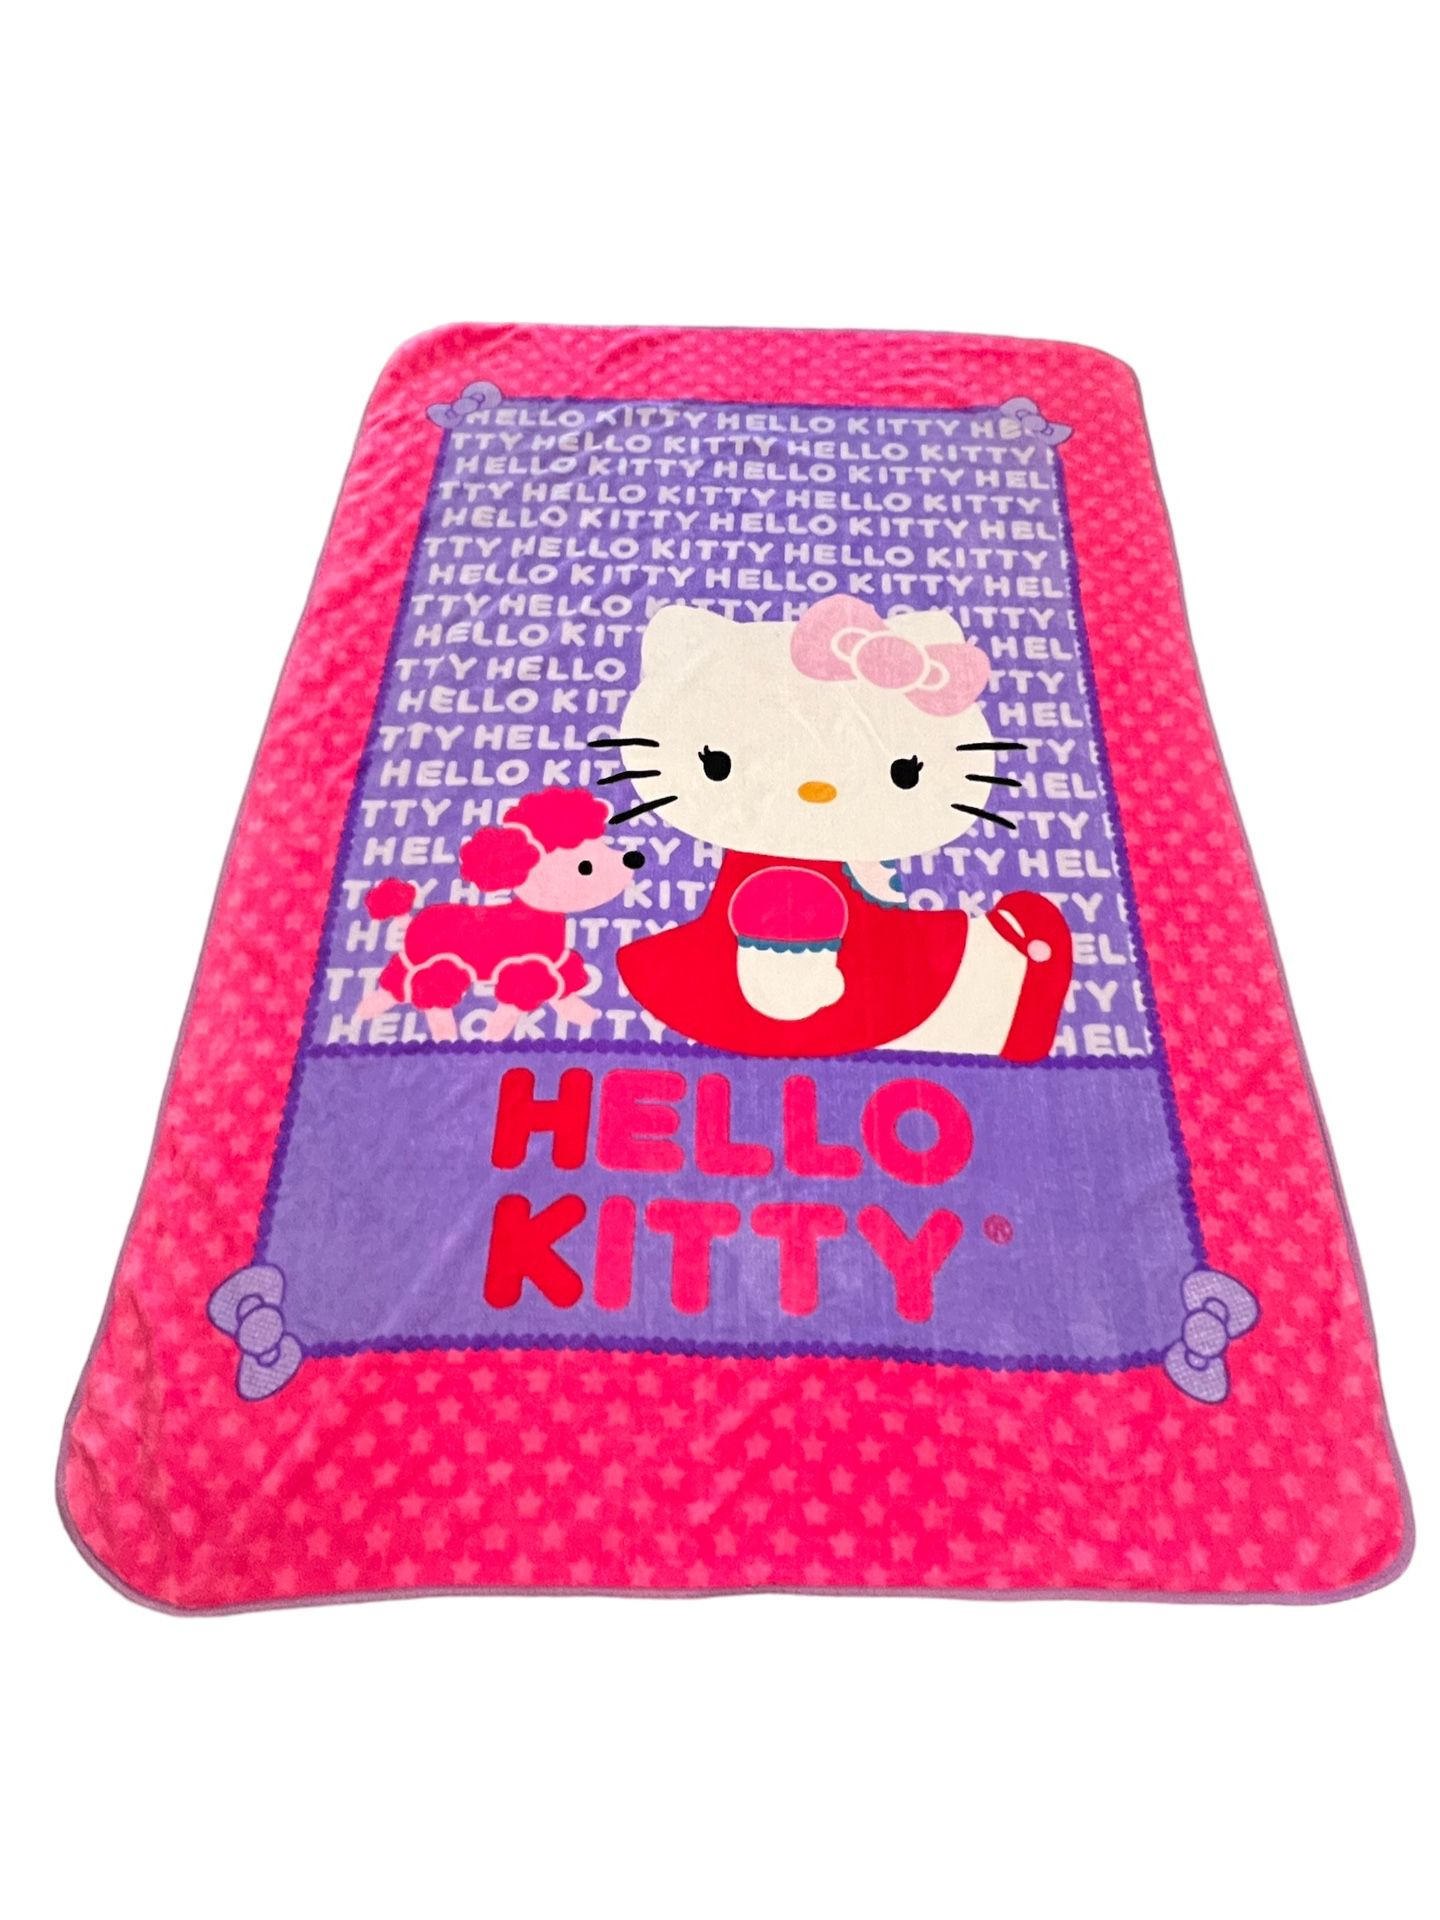 Sanrio Hello Kitty Poodle Monogram Fleece Blanket